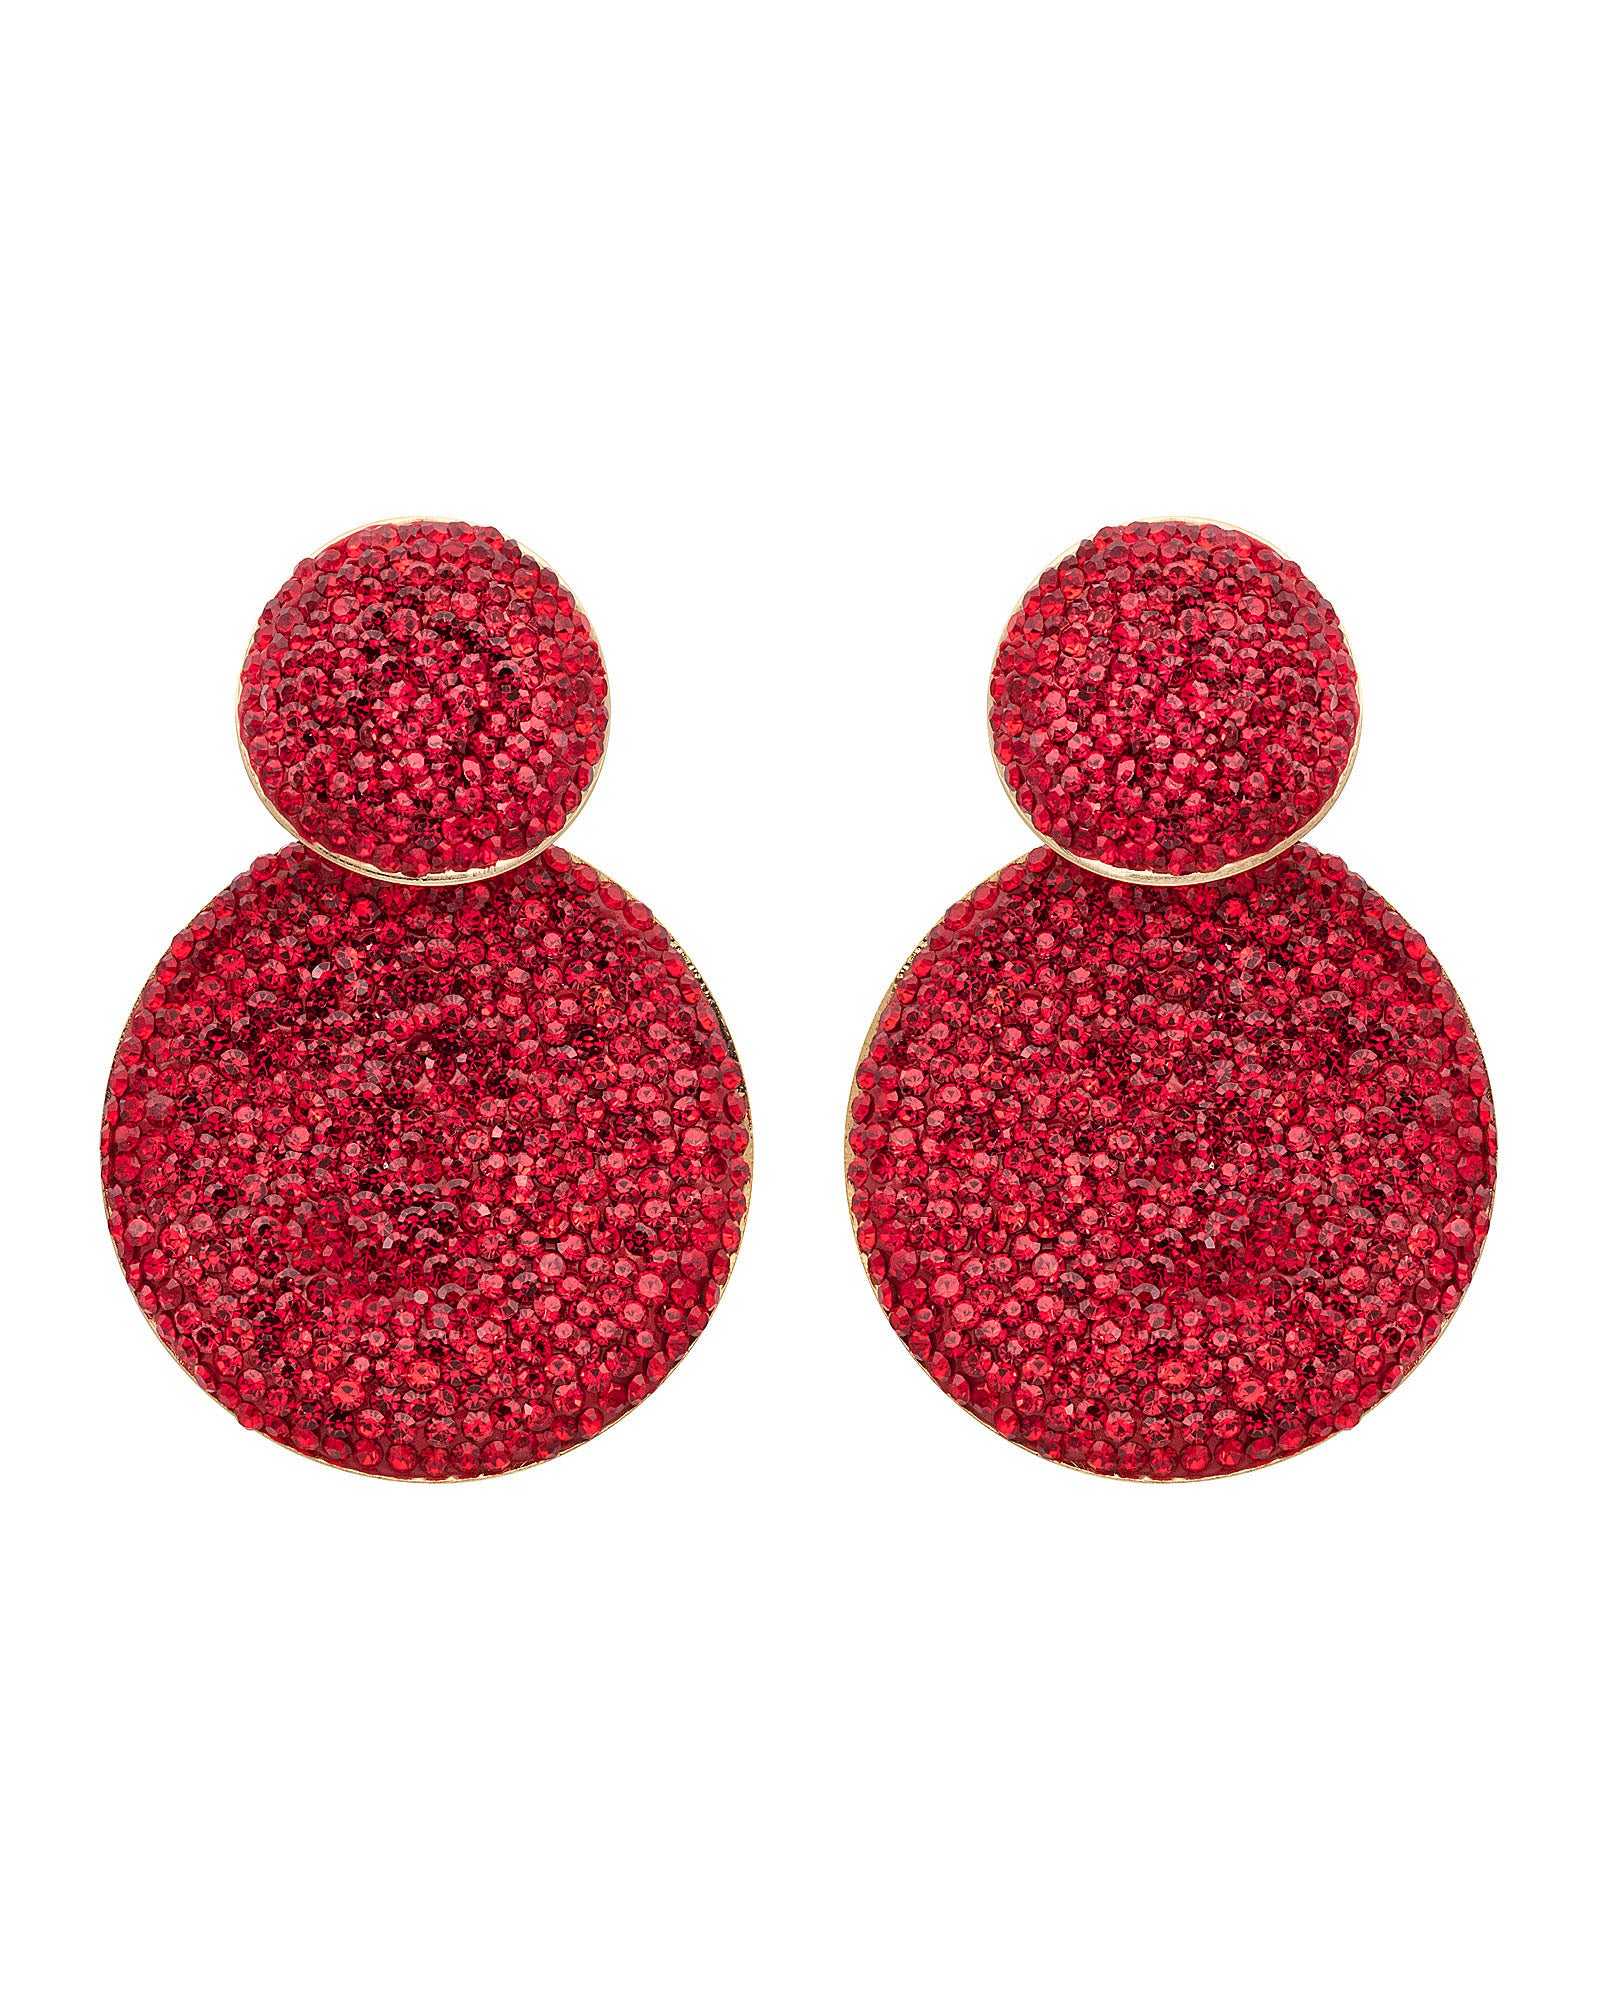 New! Siam Red Double Drop Earrings